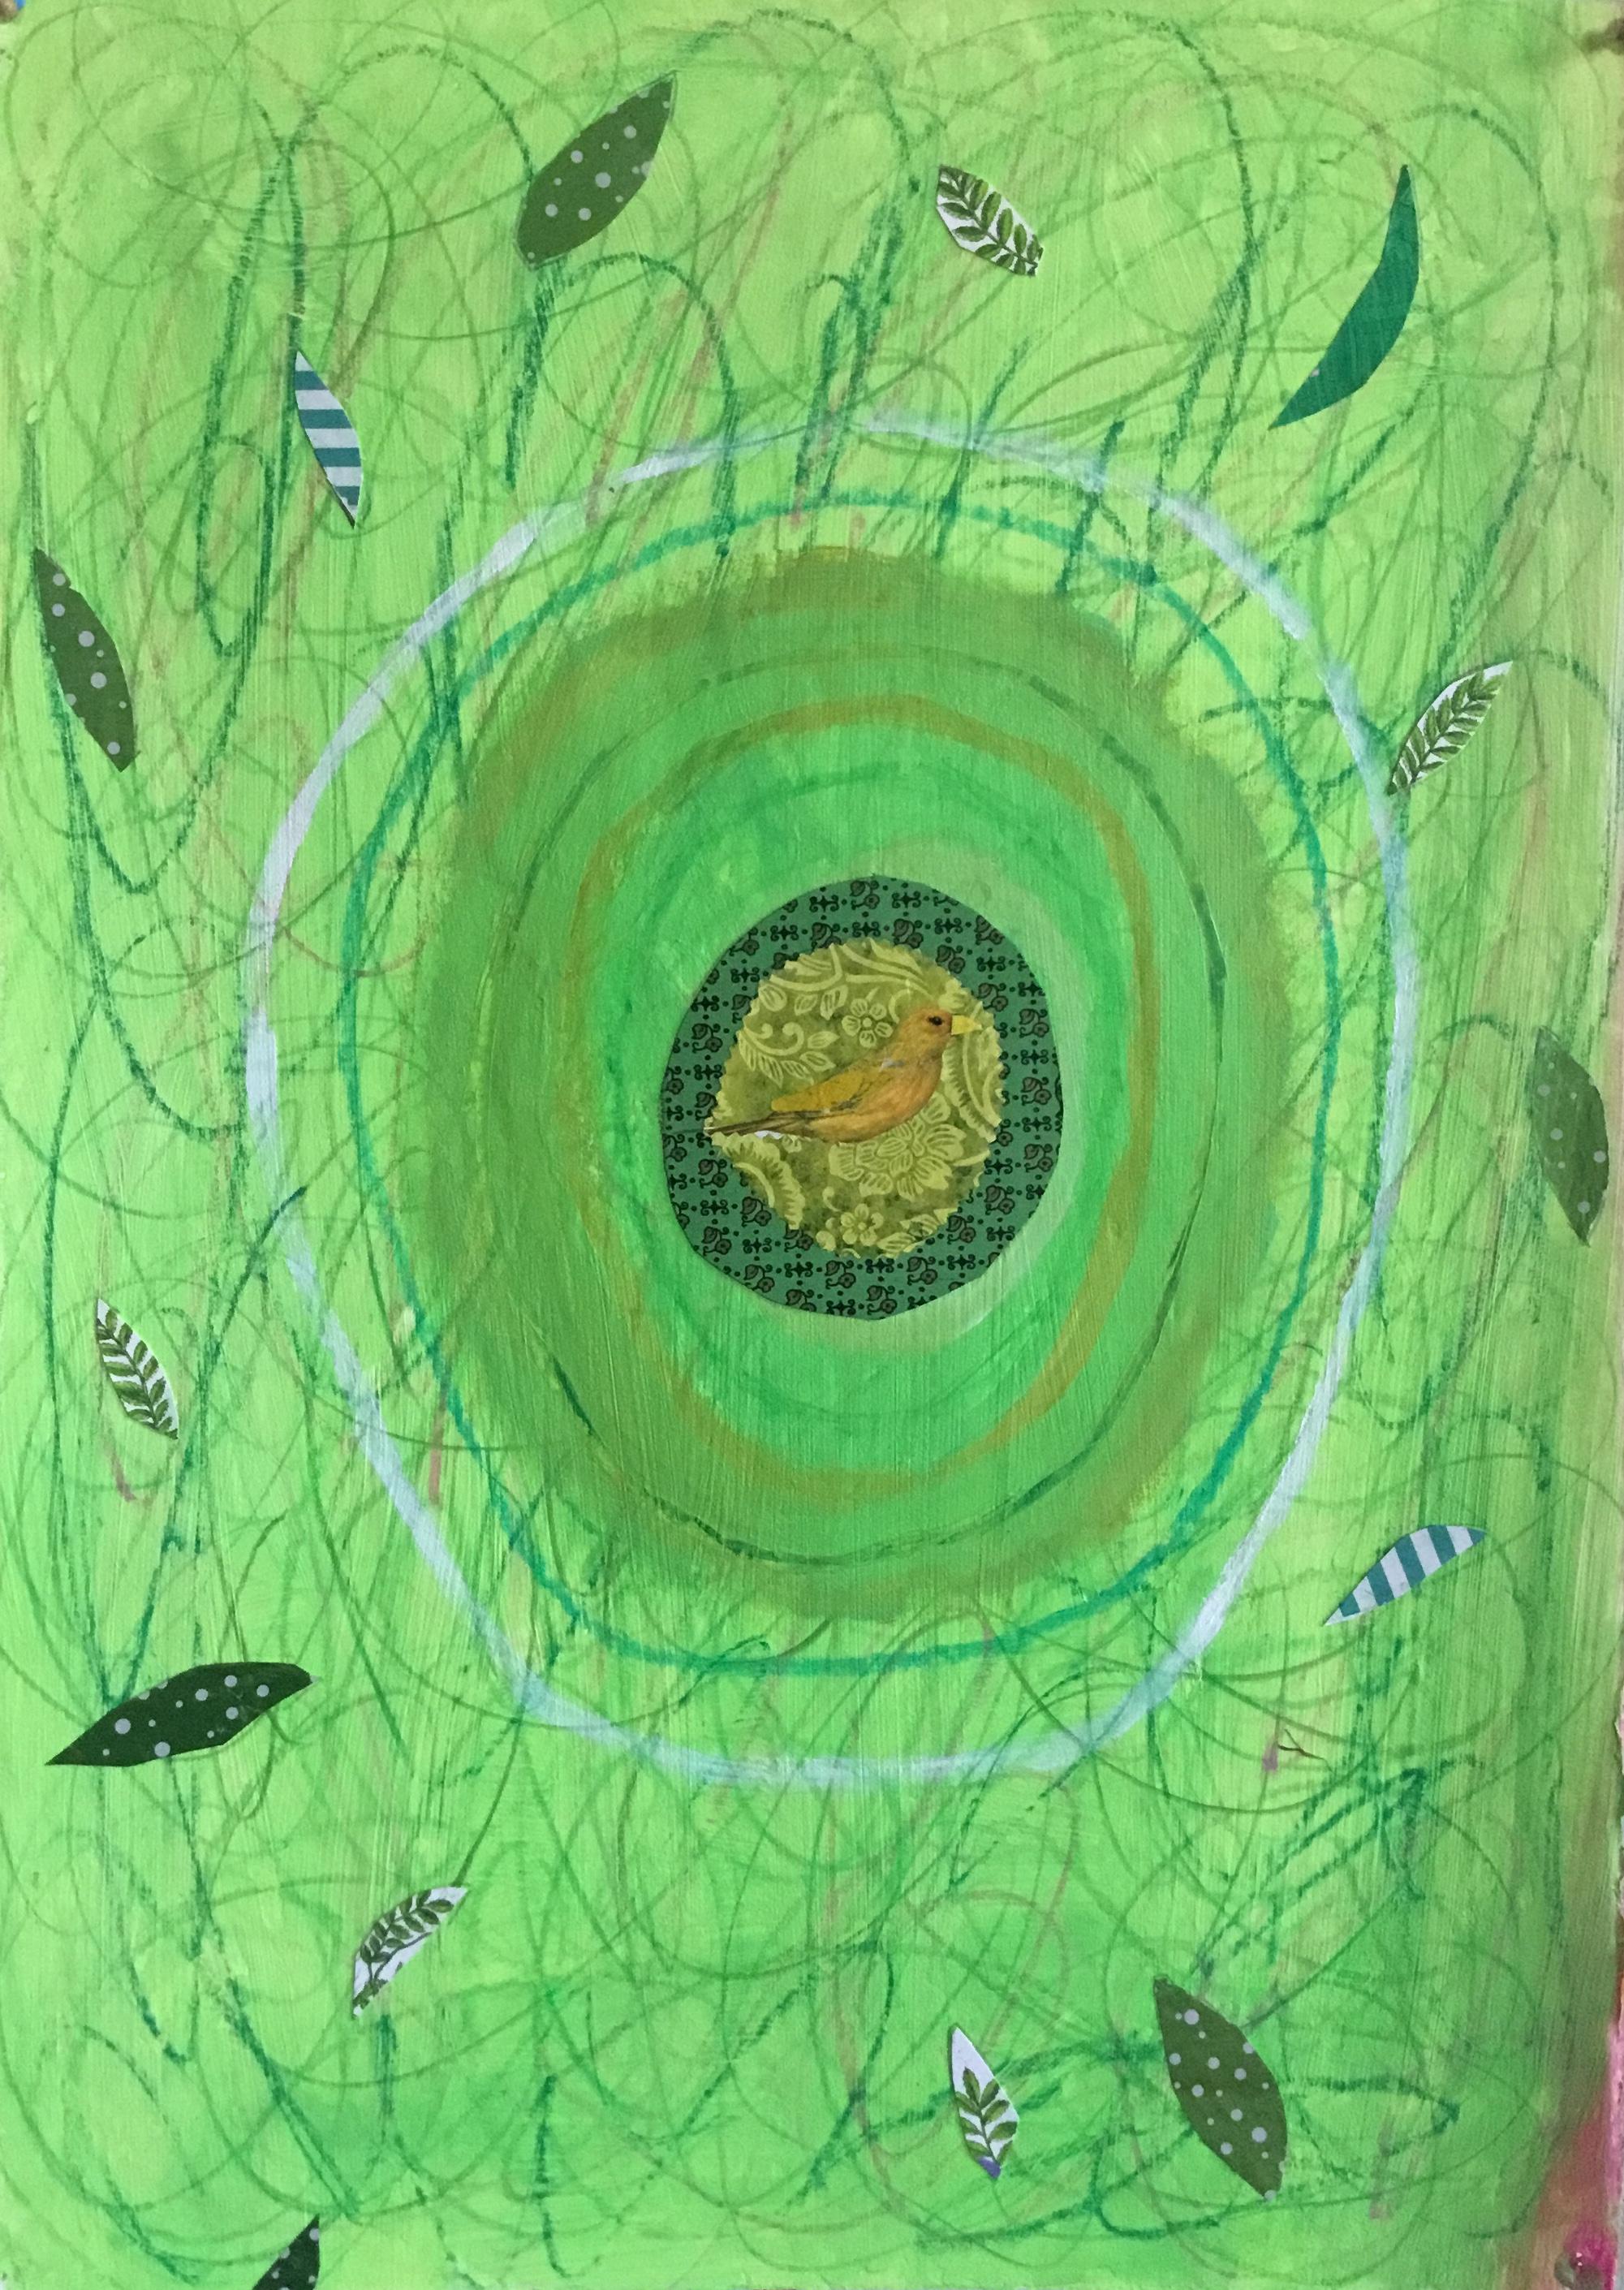 Pam Smilow Abstract Drawing - Mandala Series: Green Gold with Yellow Bird